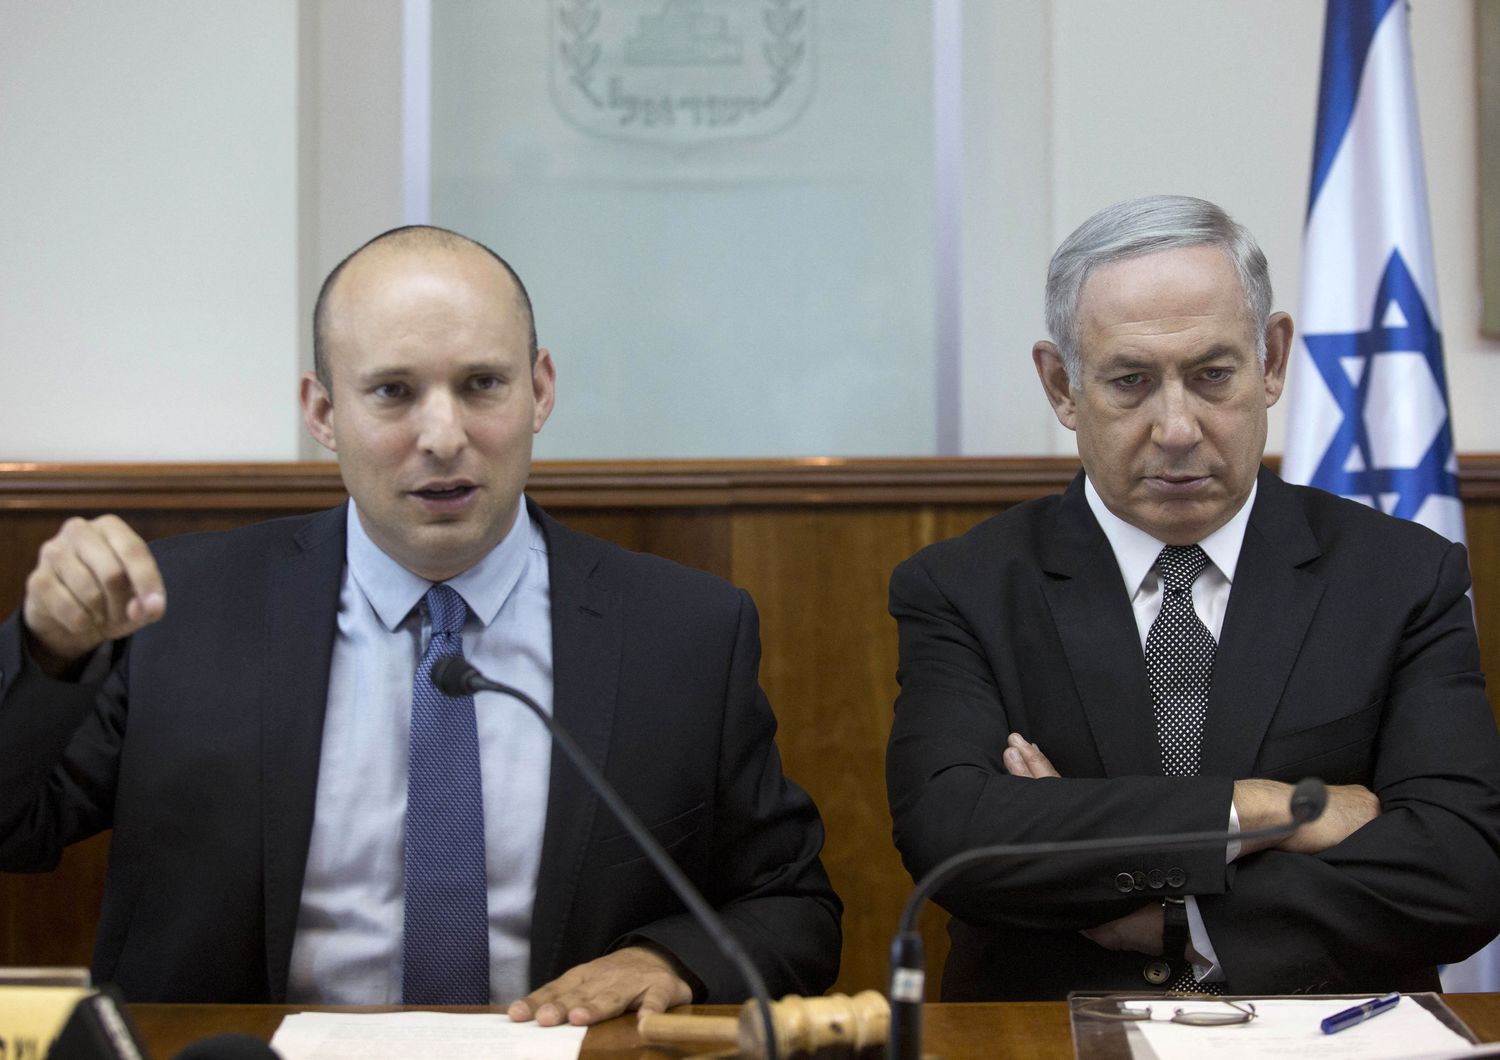 &nbsp;Bennett e Netanyahu